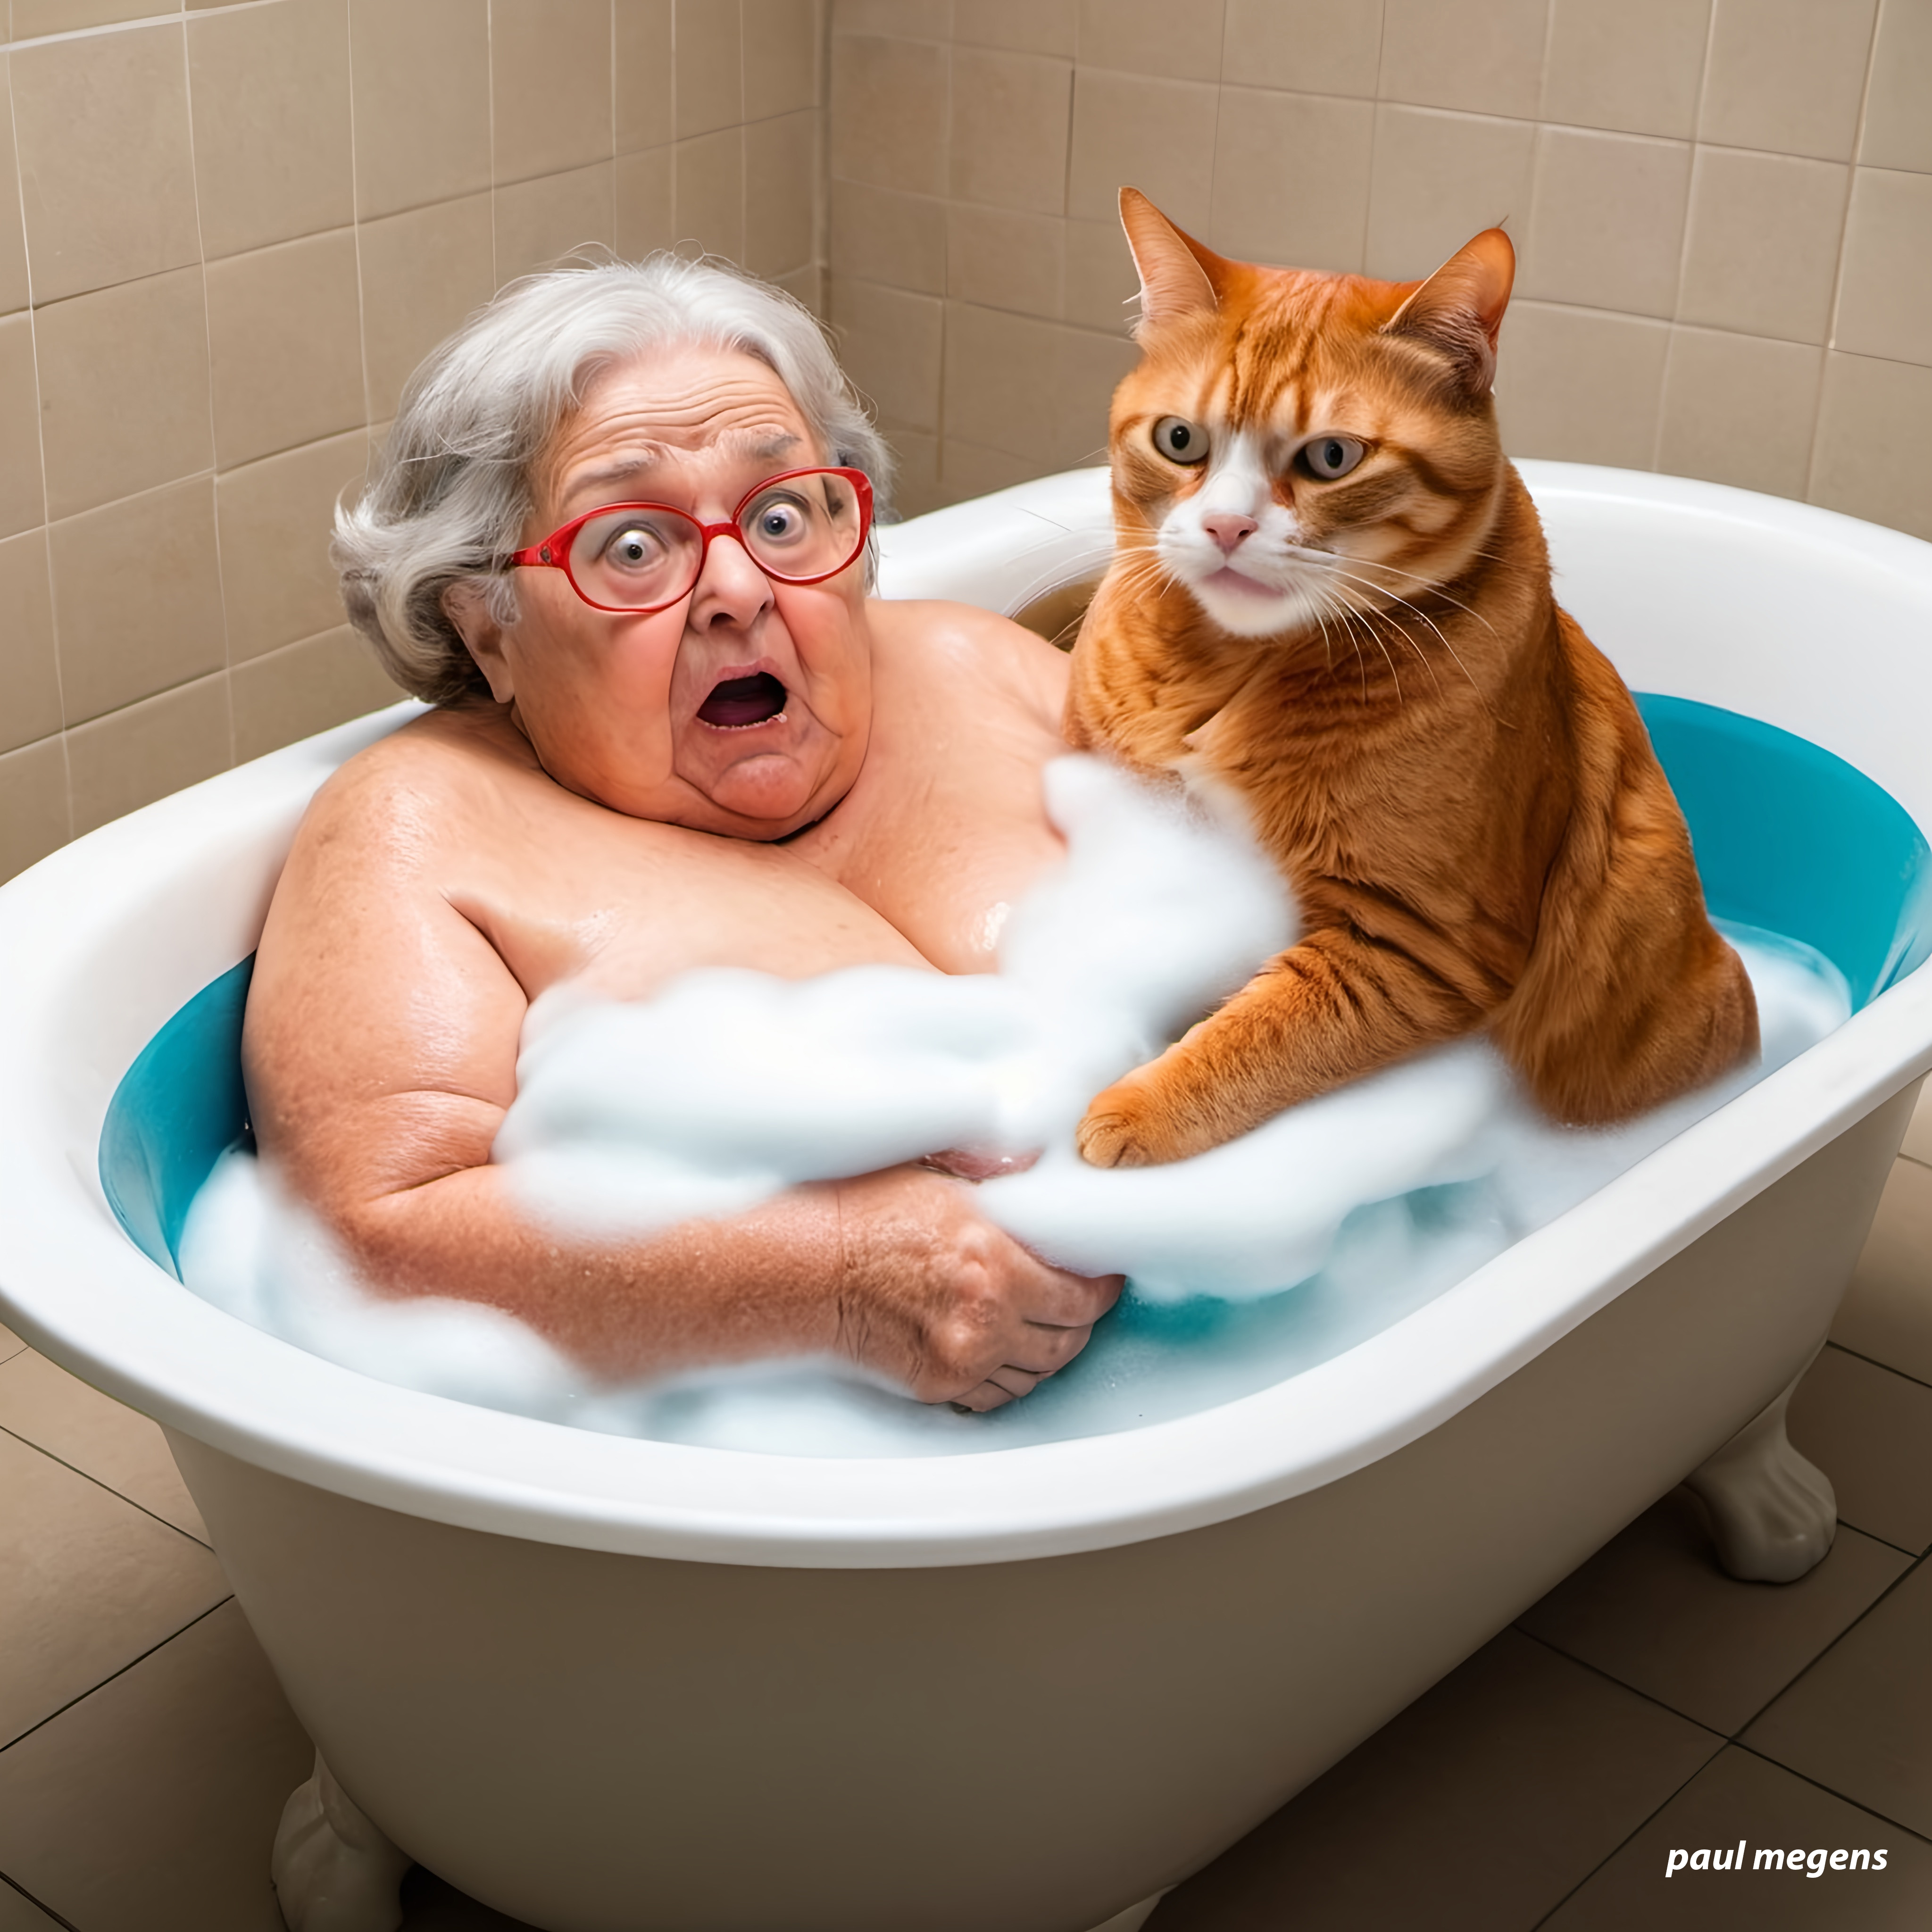 grandma & the cat